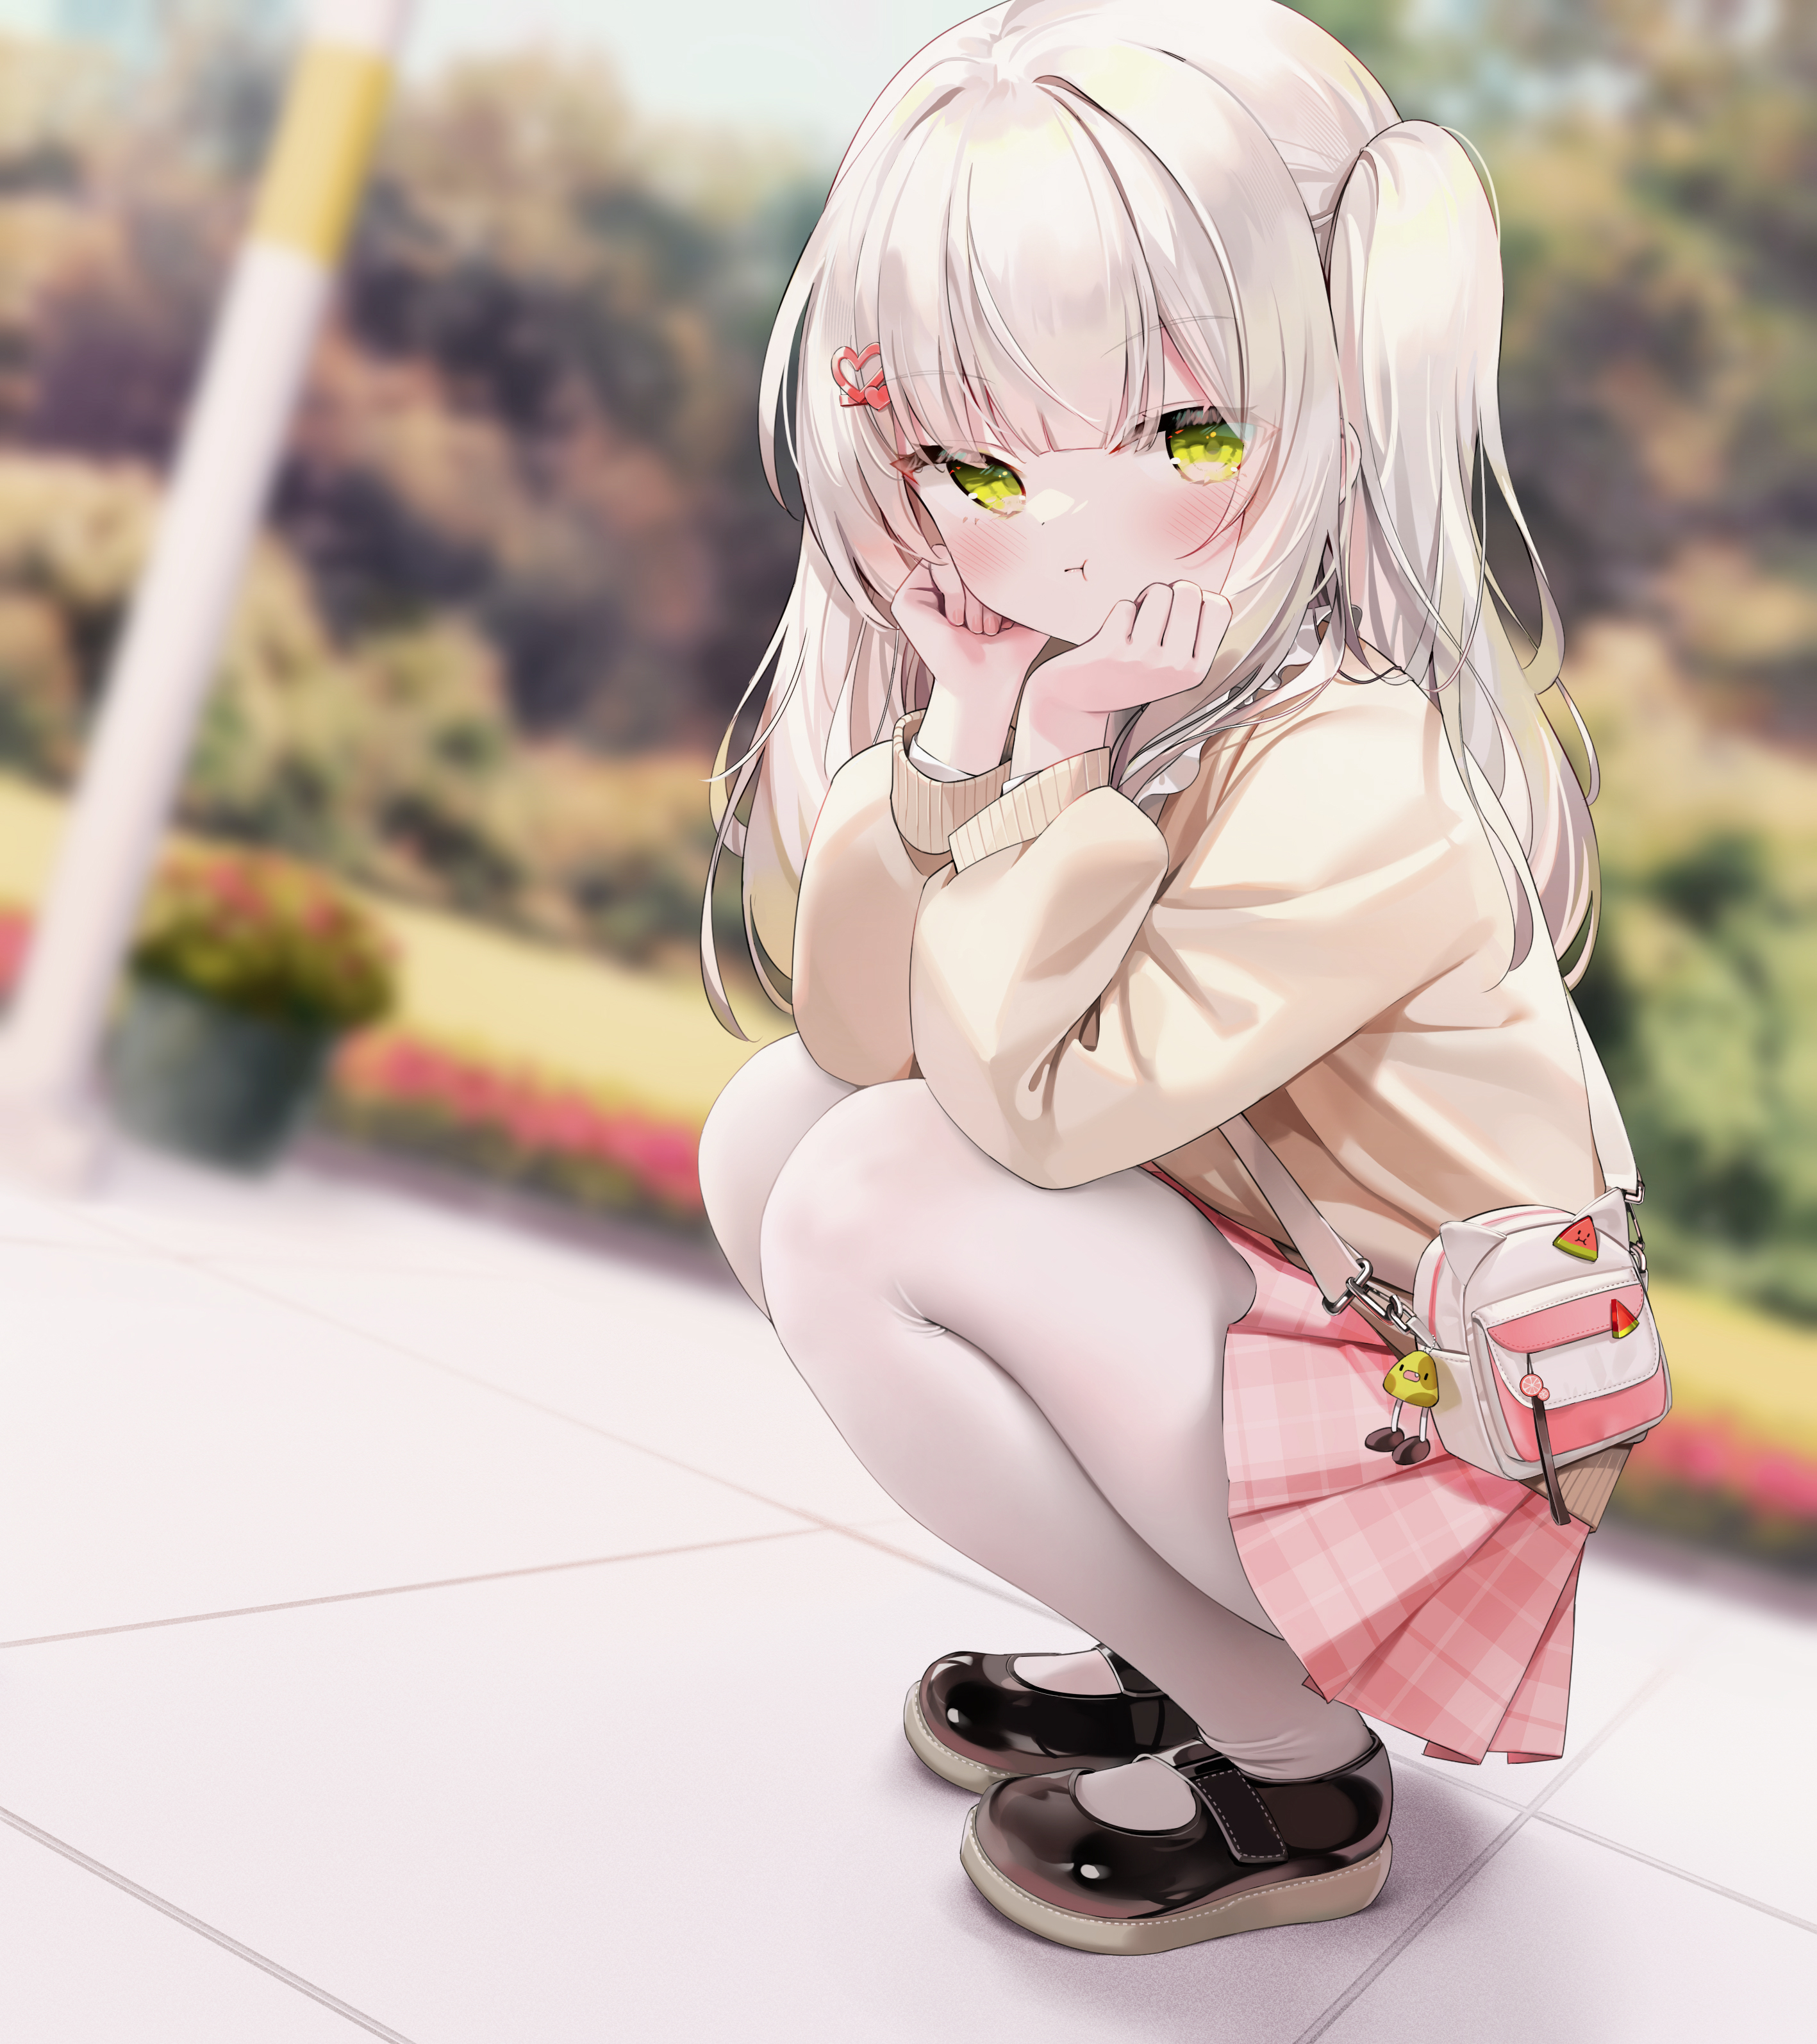 Anime Anime Girls Artwork White Hair Green Eyes Hairpins Bag Shy Sweater Pouting Chen Bin 2835x3189